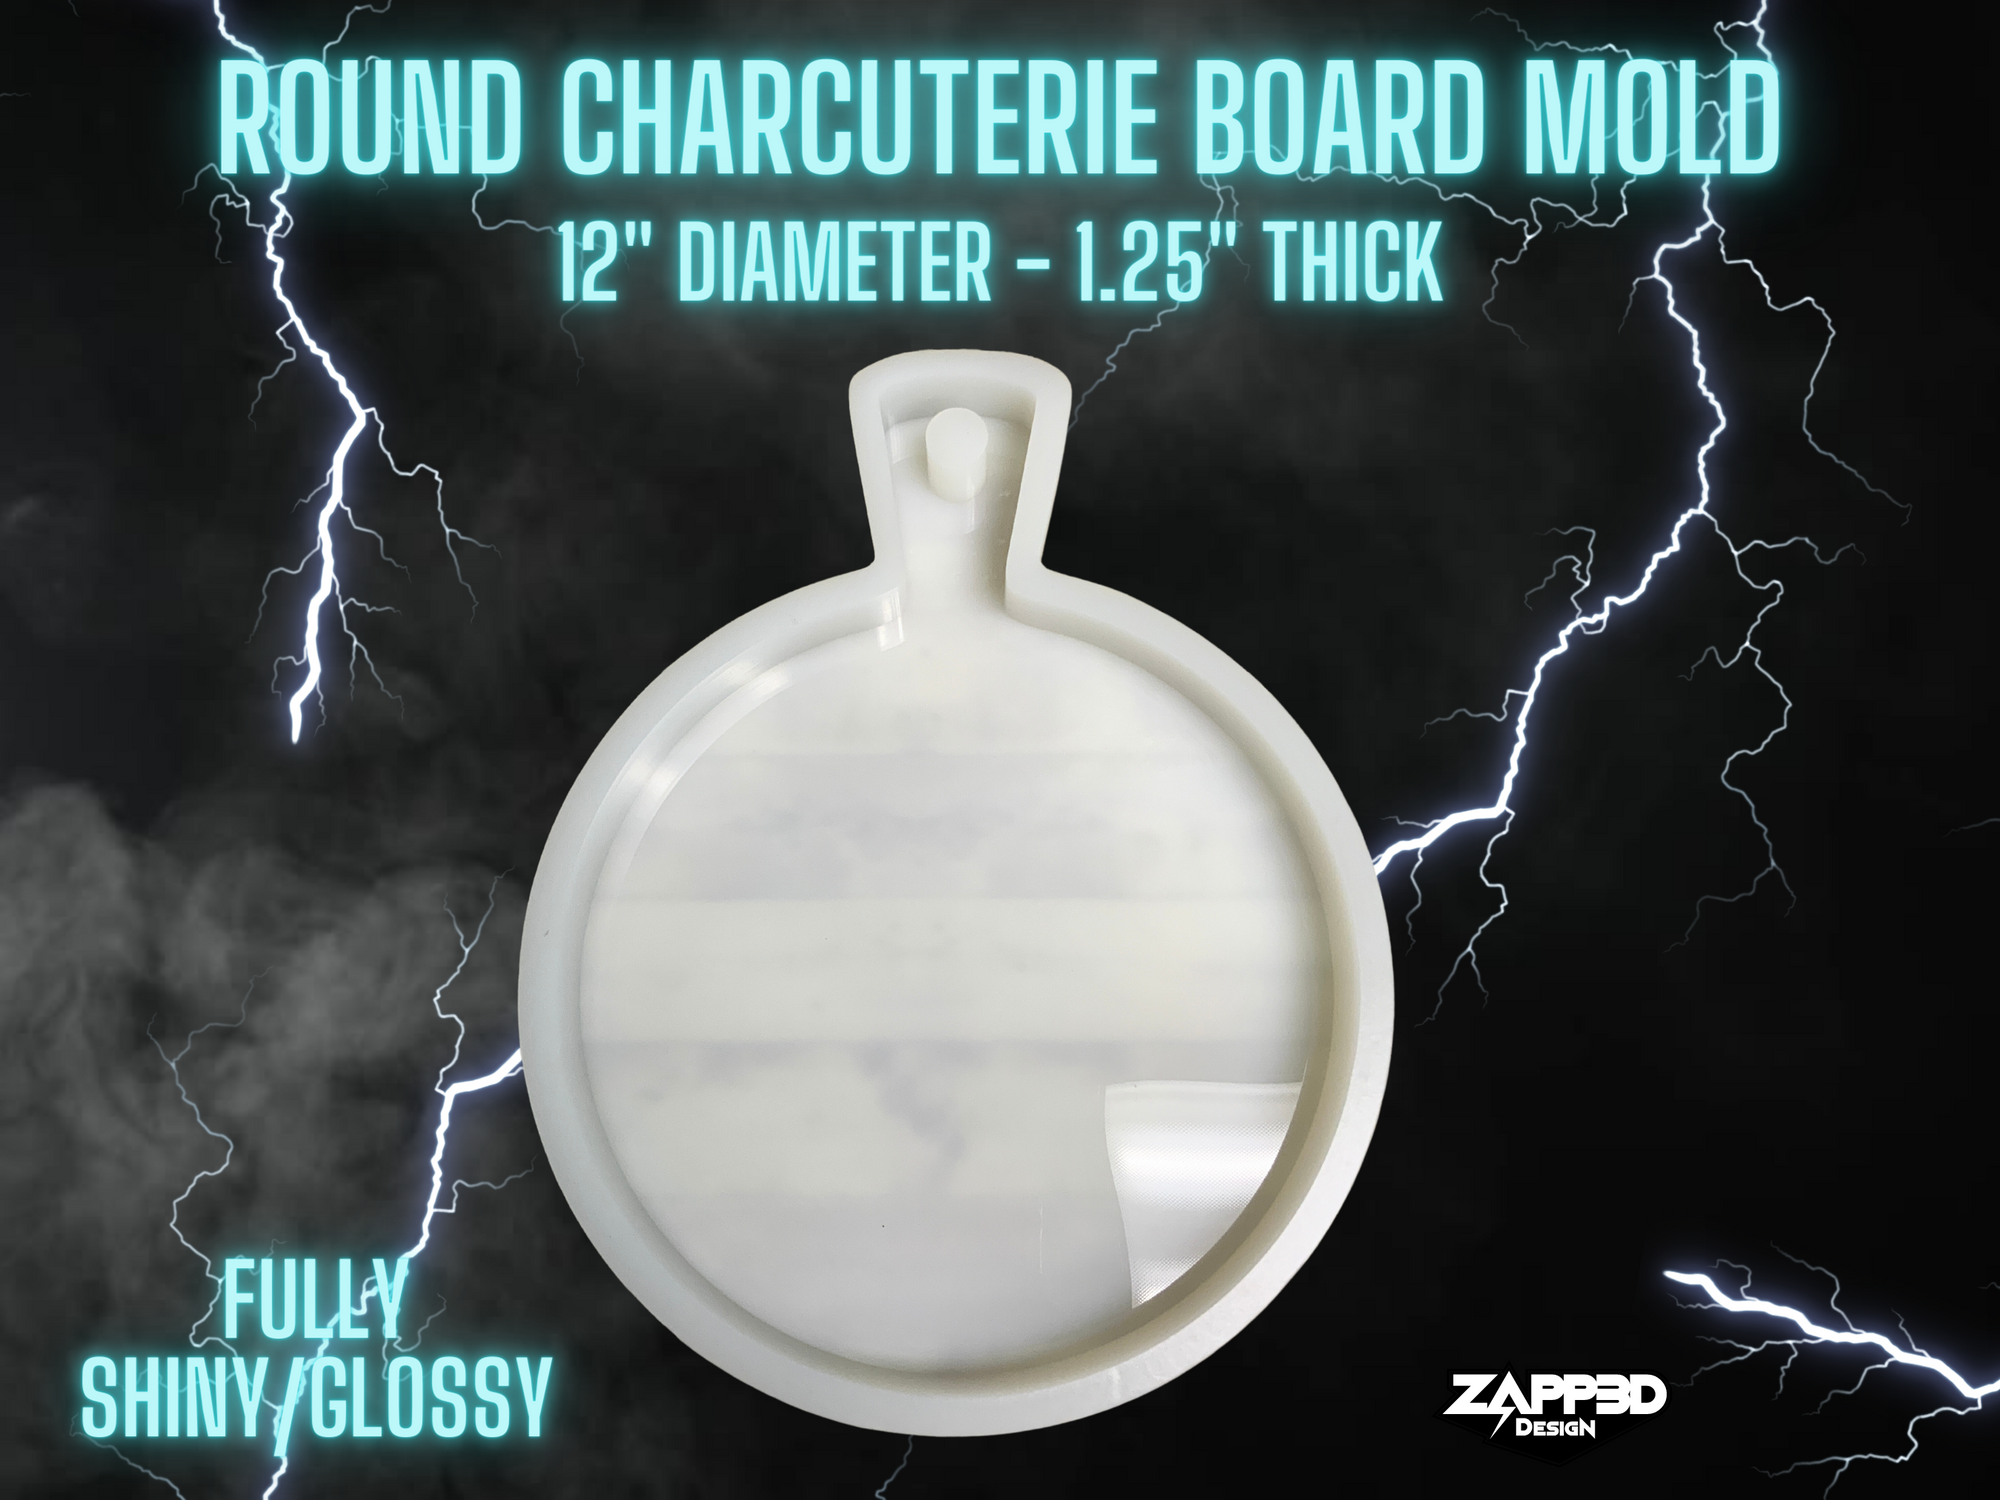 Charcuterie Board Mold | 12" X 1.25" Deep |  Cheese Board Mold, Round Charcuterie Board, Charcuterie Mold, Serving Board Mold, Round Mold